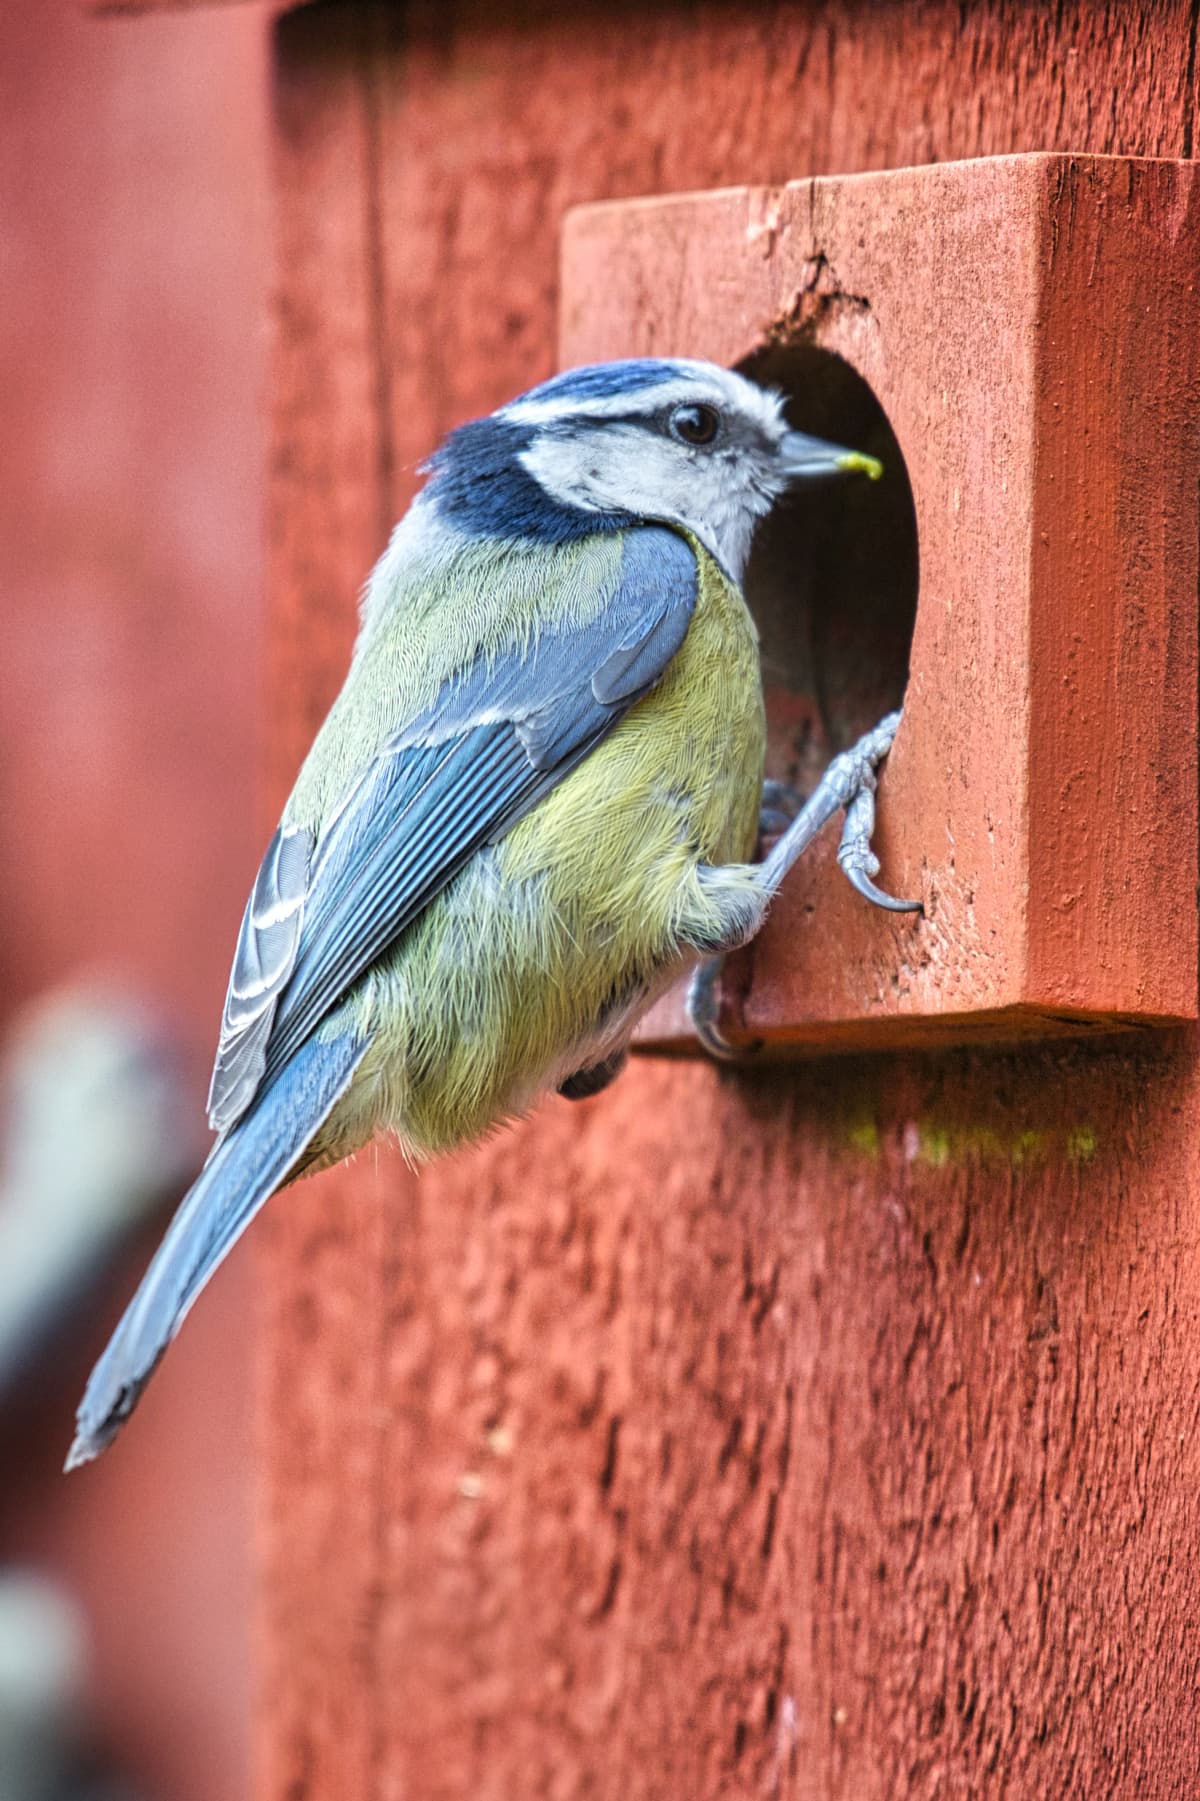 Blue bird perched on birdhouse entrance